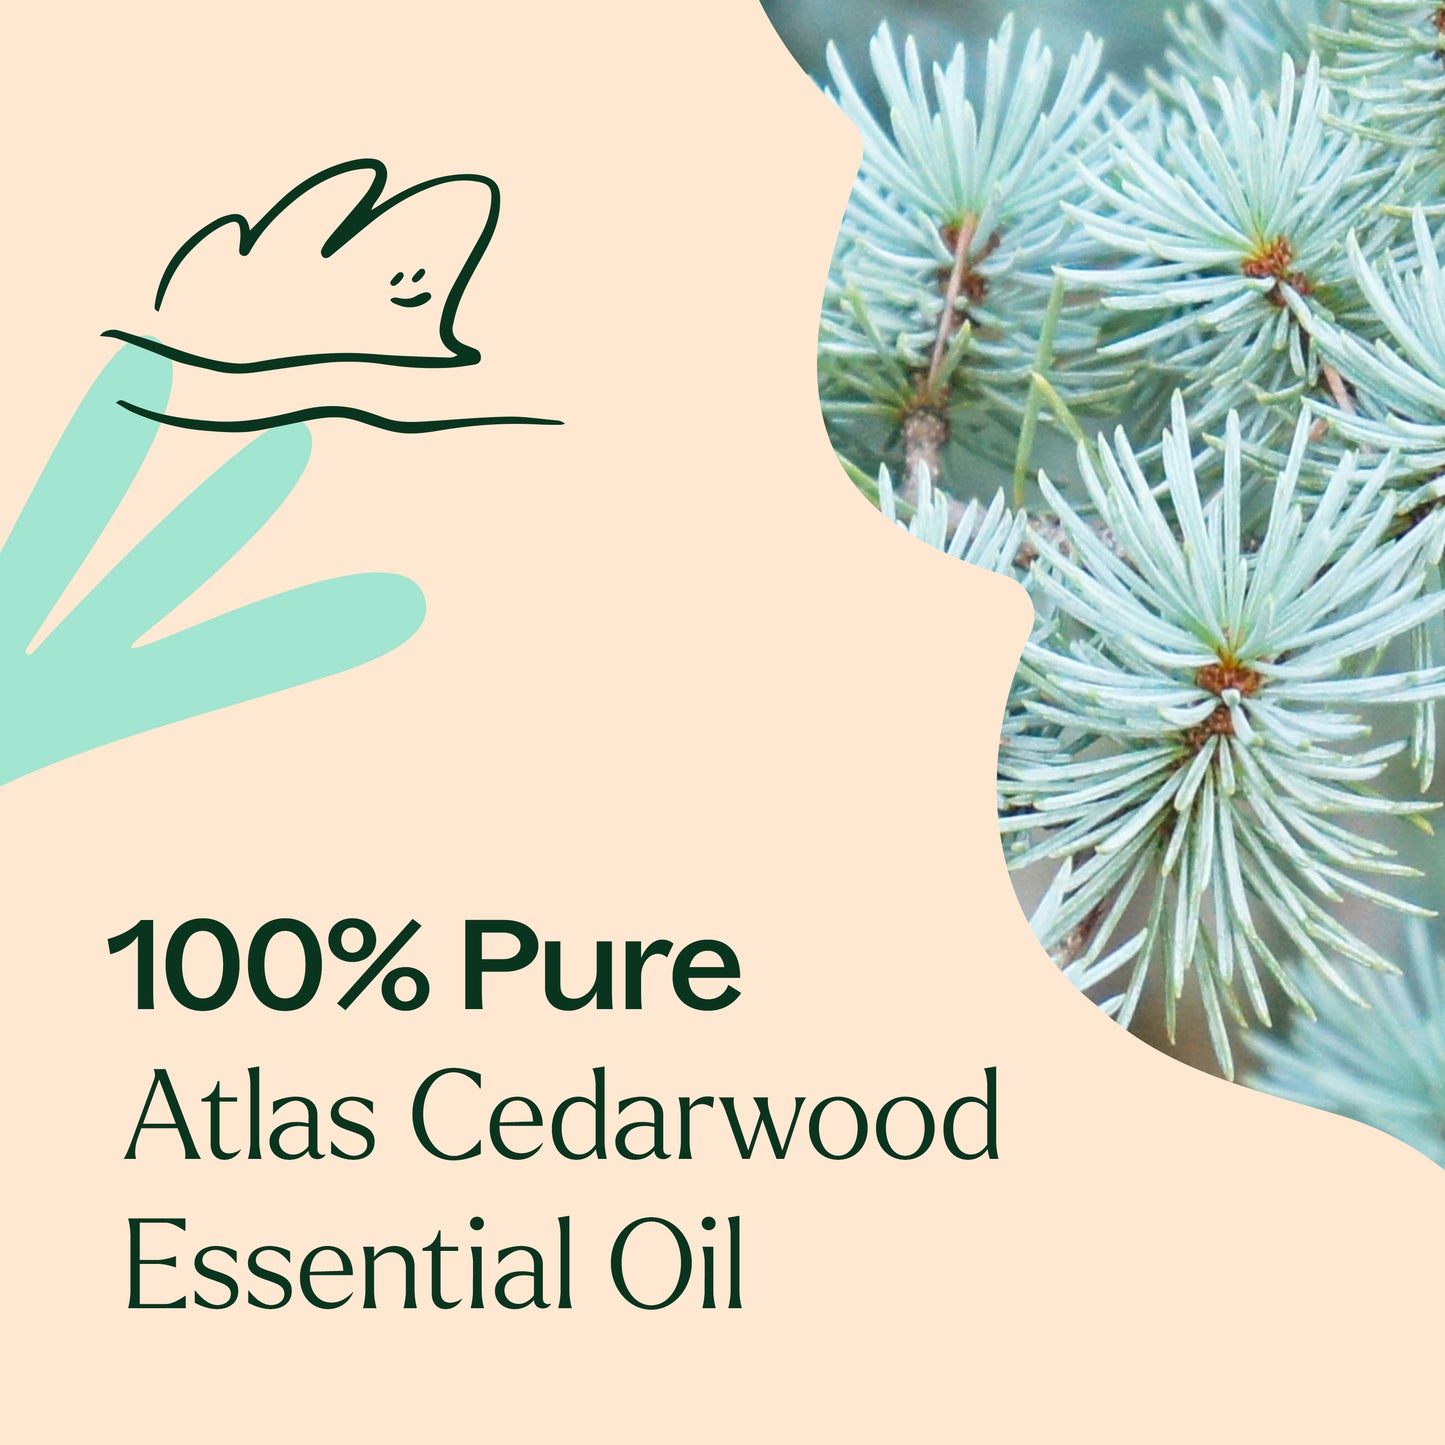 Atlas Cedarwood Essential Oil